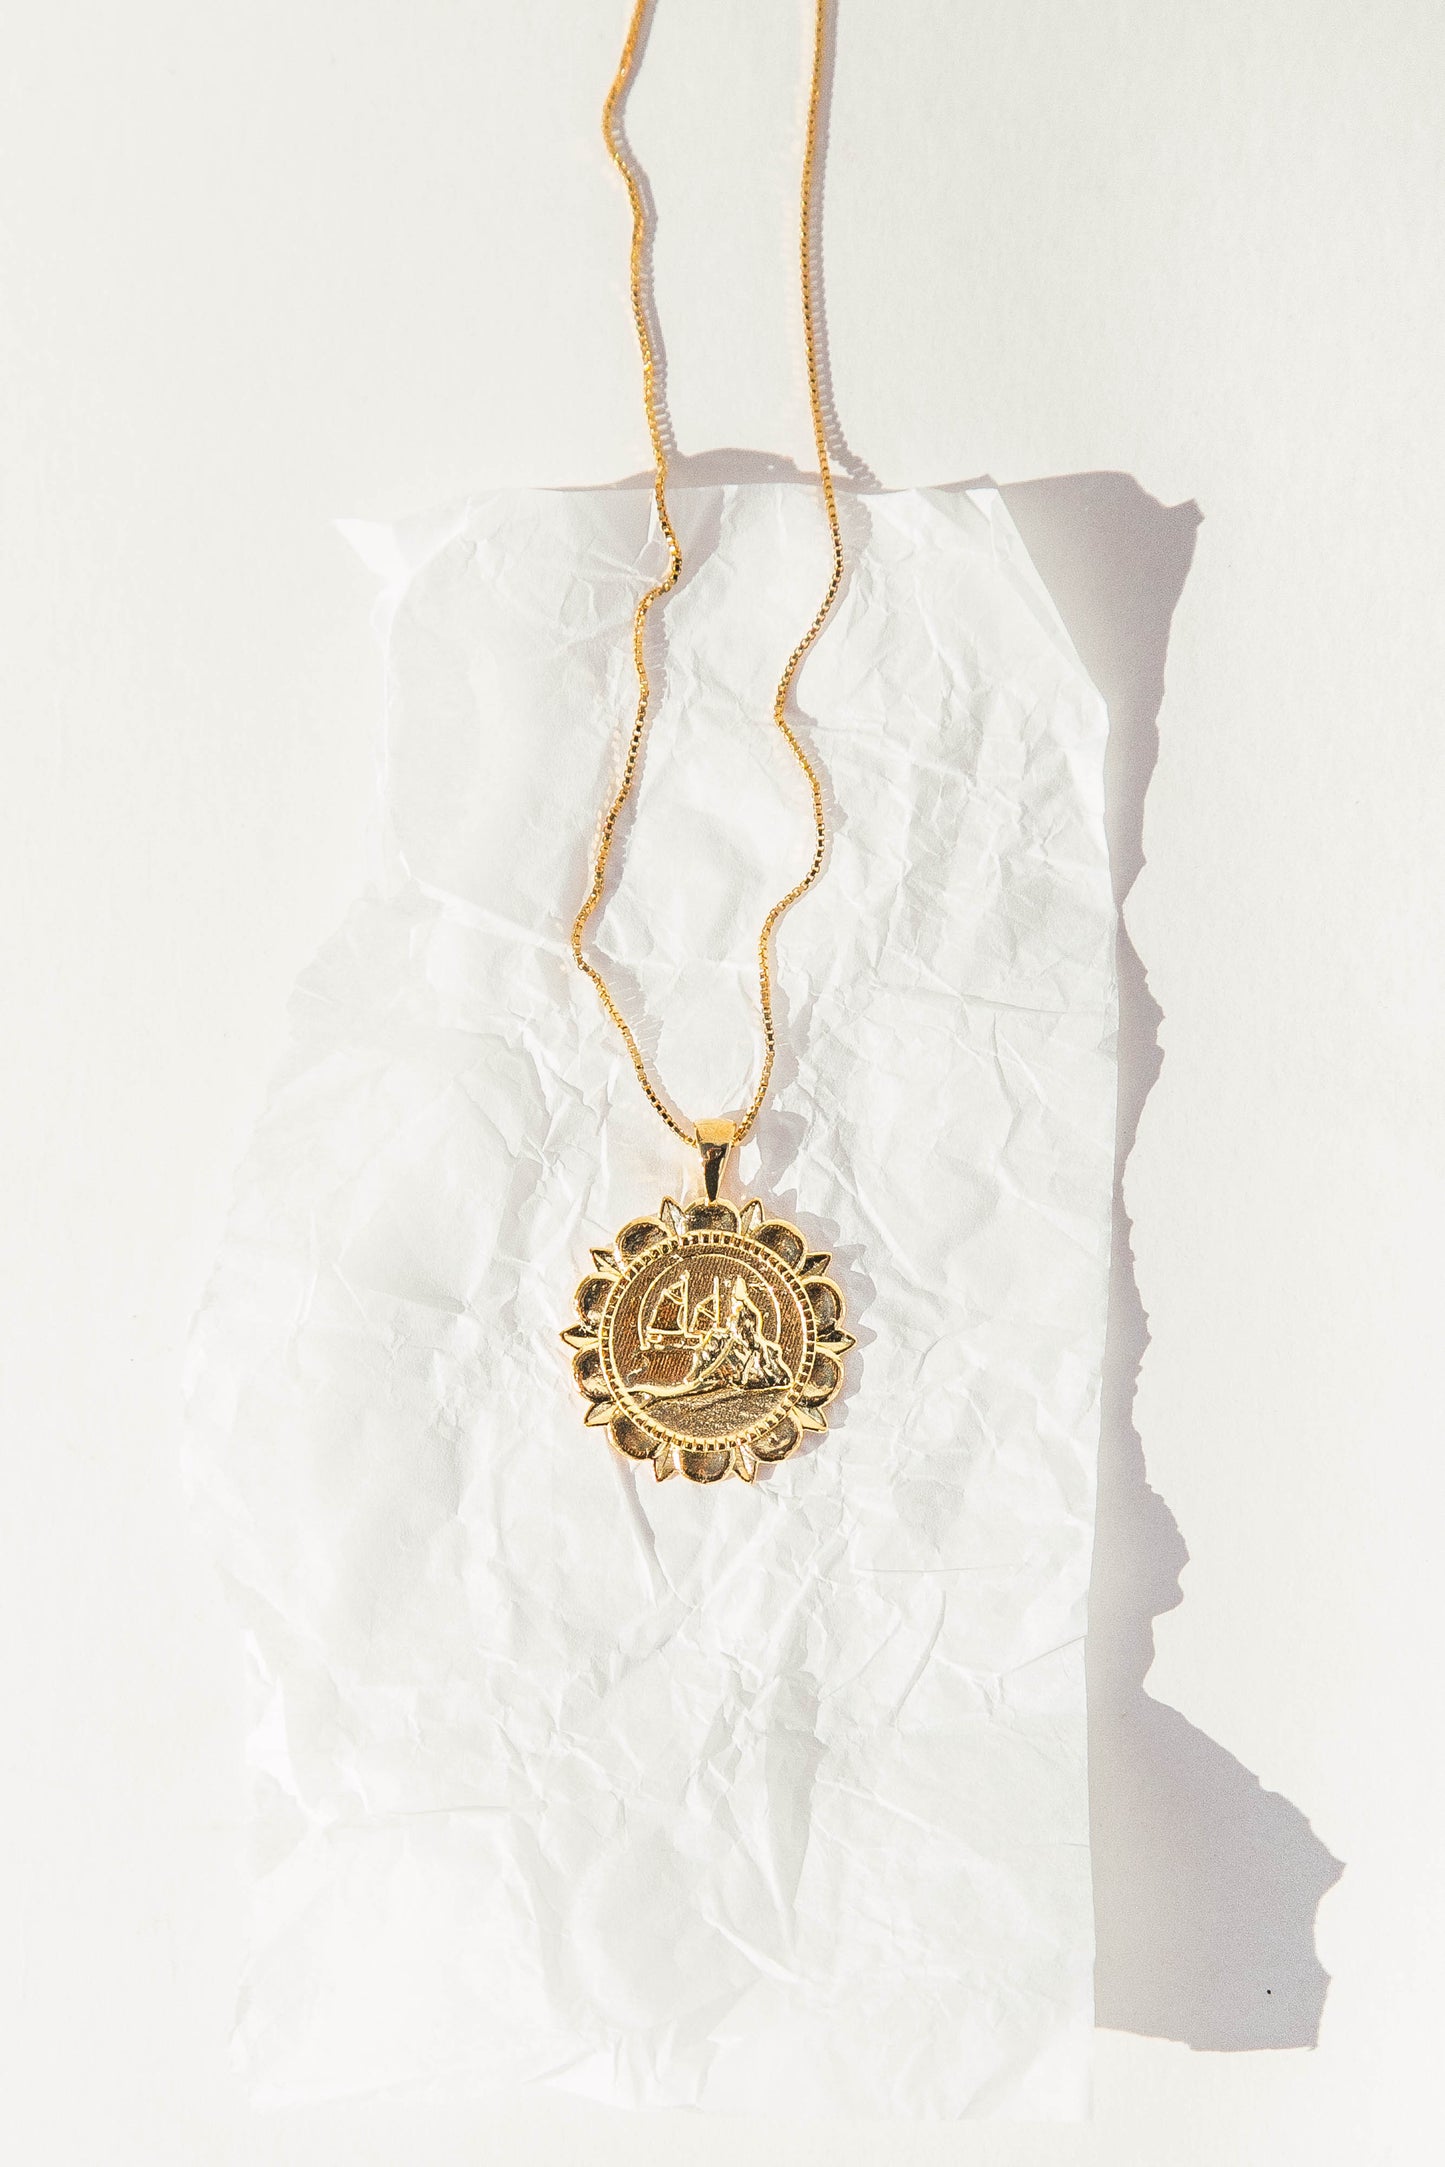 the java goddess necklace